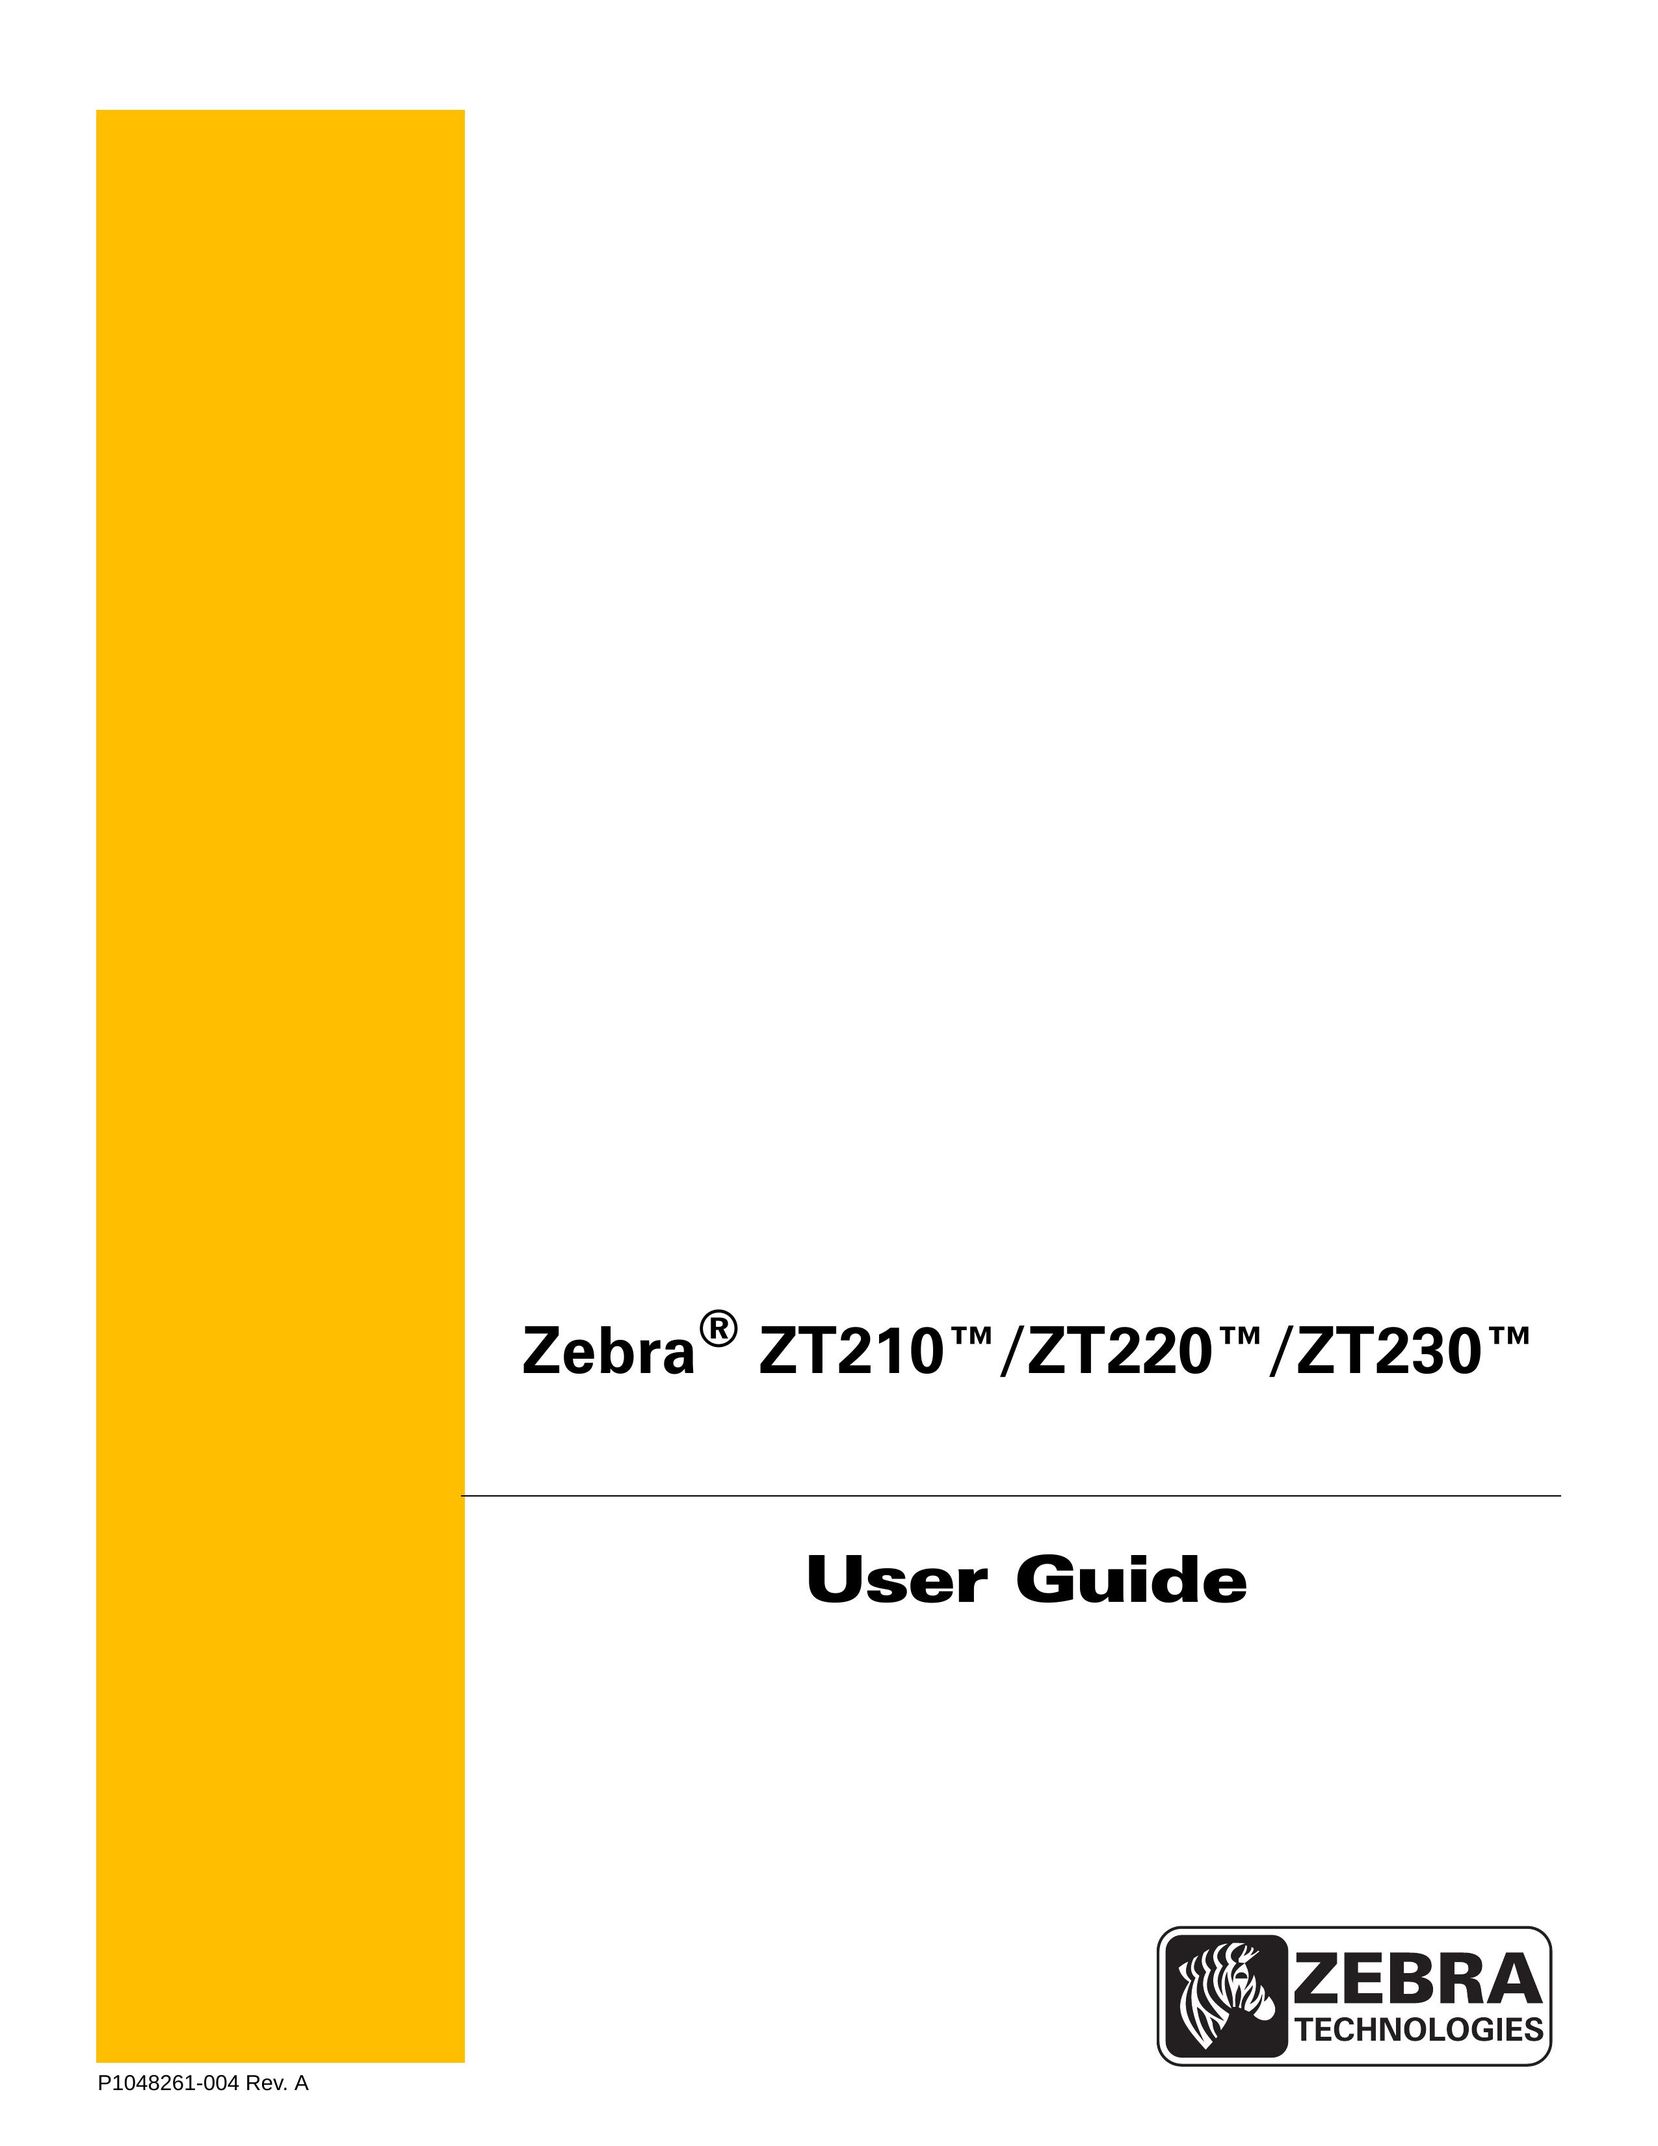 Zebra Technologies ZT230 Label Maker User Manual